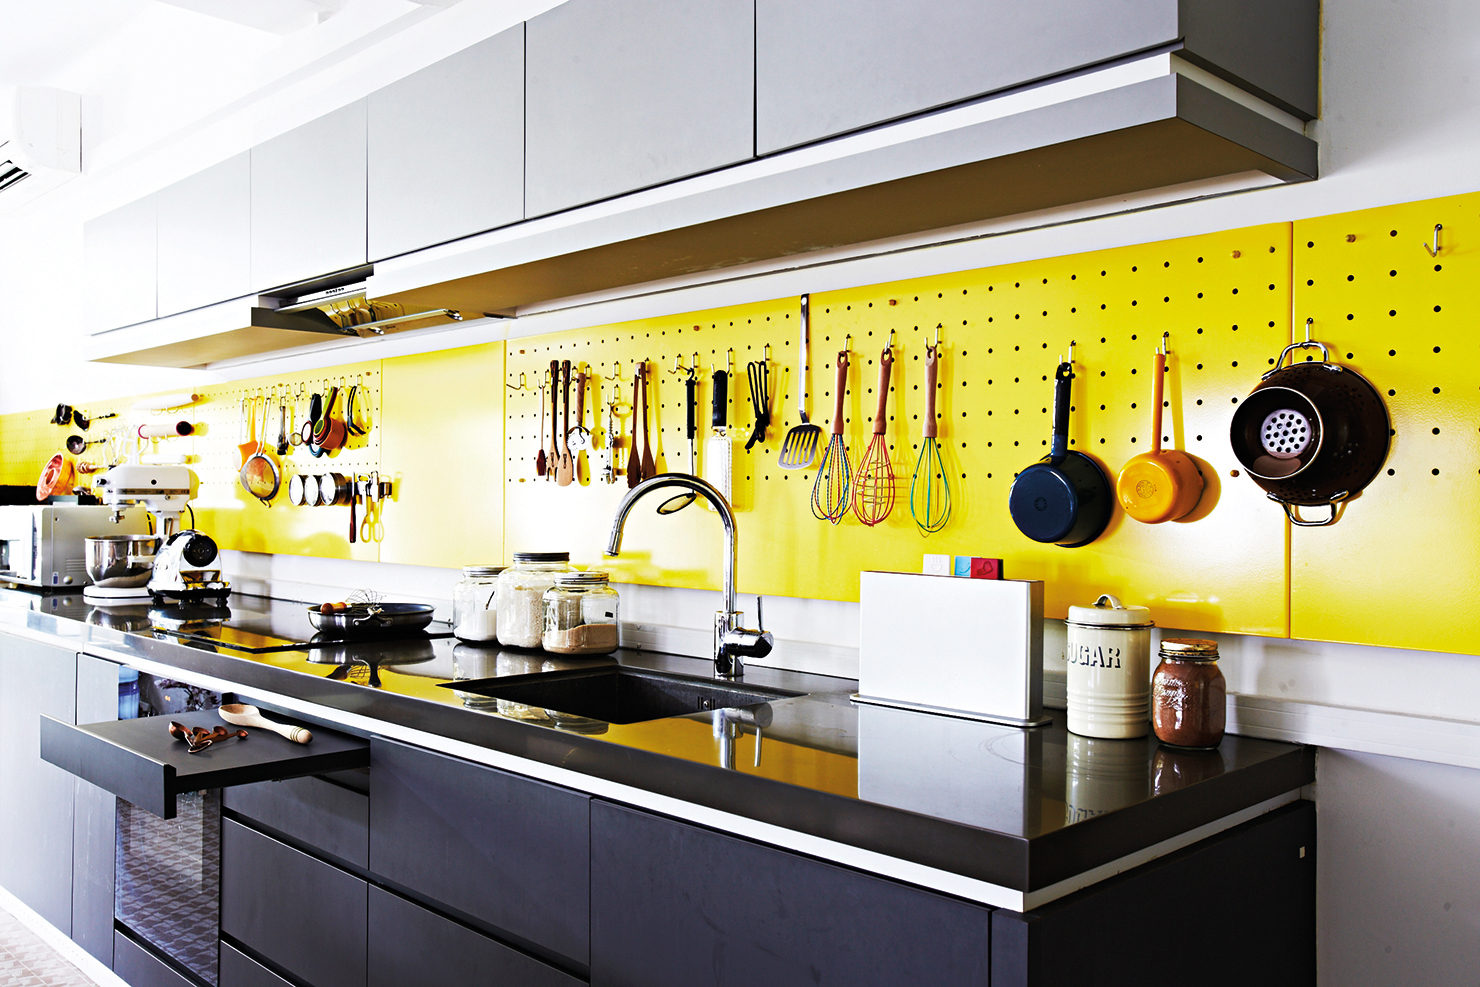 Pegboard ярко желтого цвета размещены на фартуке кухни